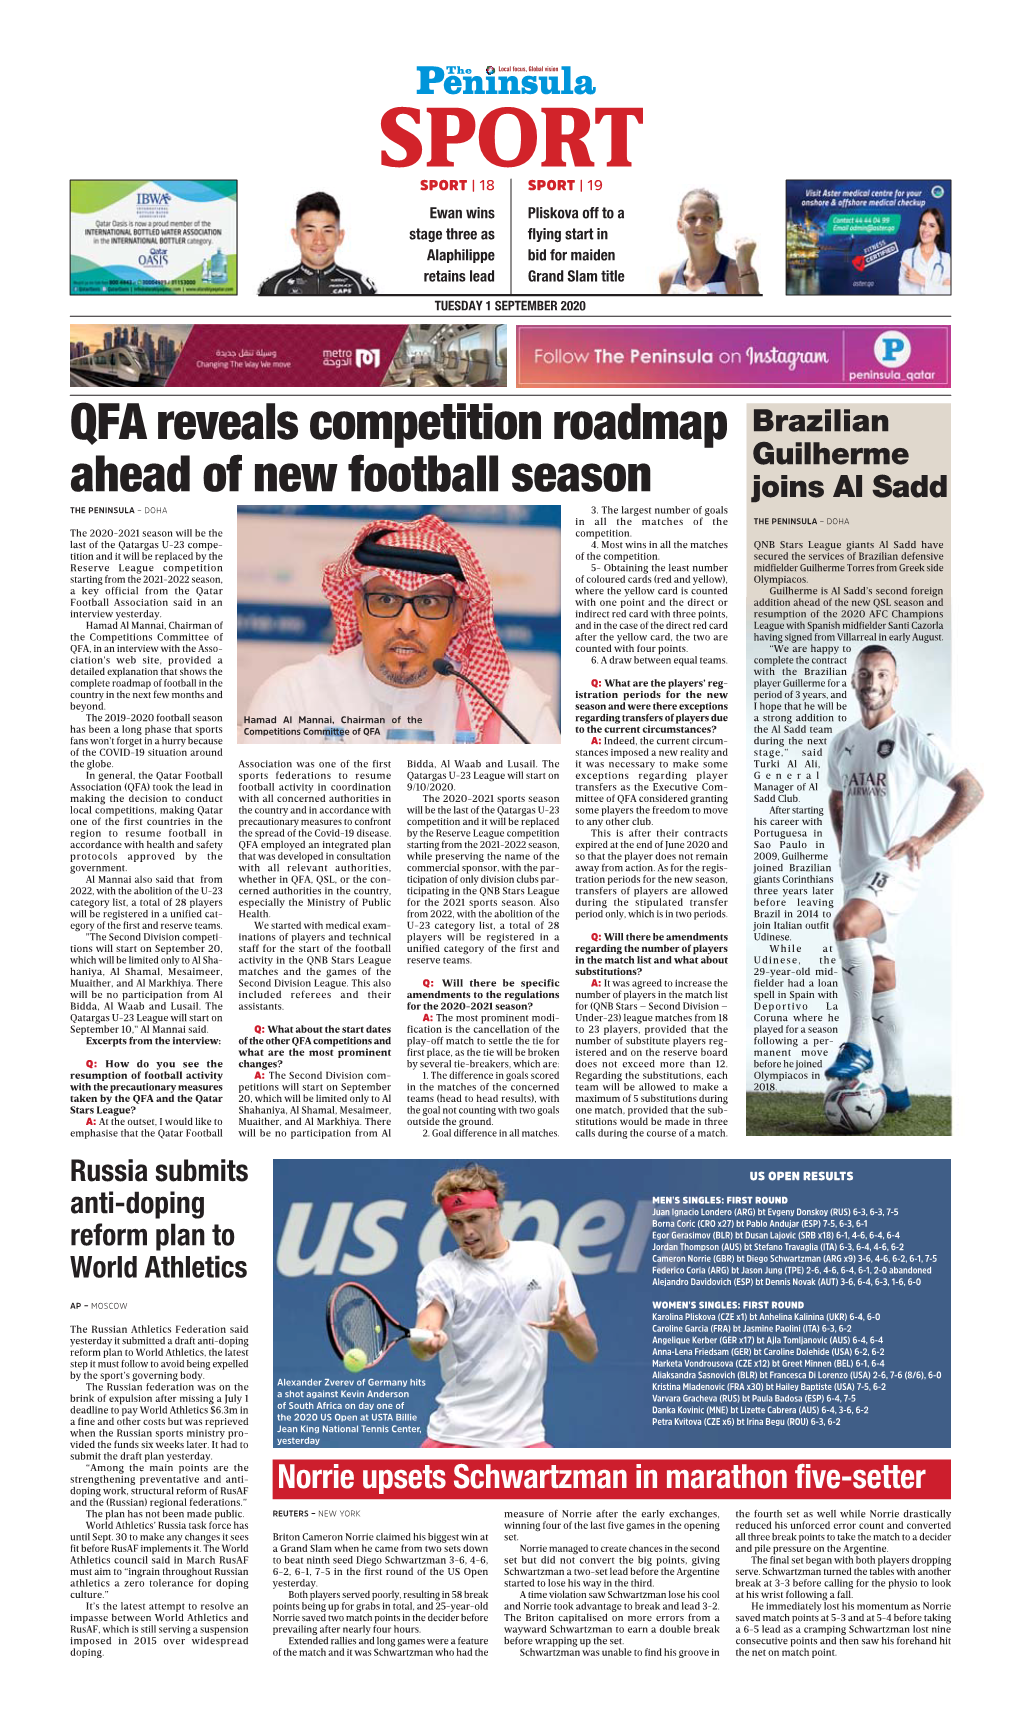 QFA Reveals Competition Roadmap Ahead of New Football Season